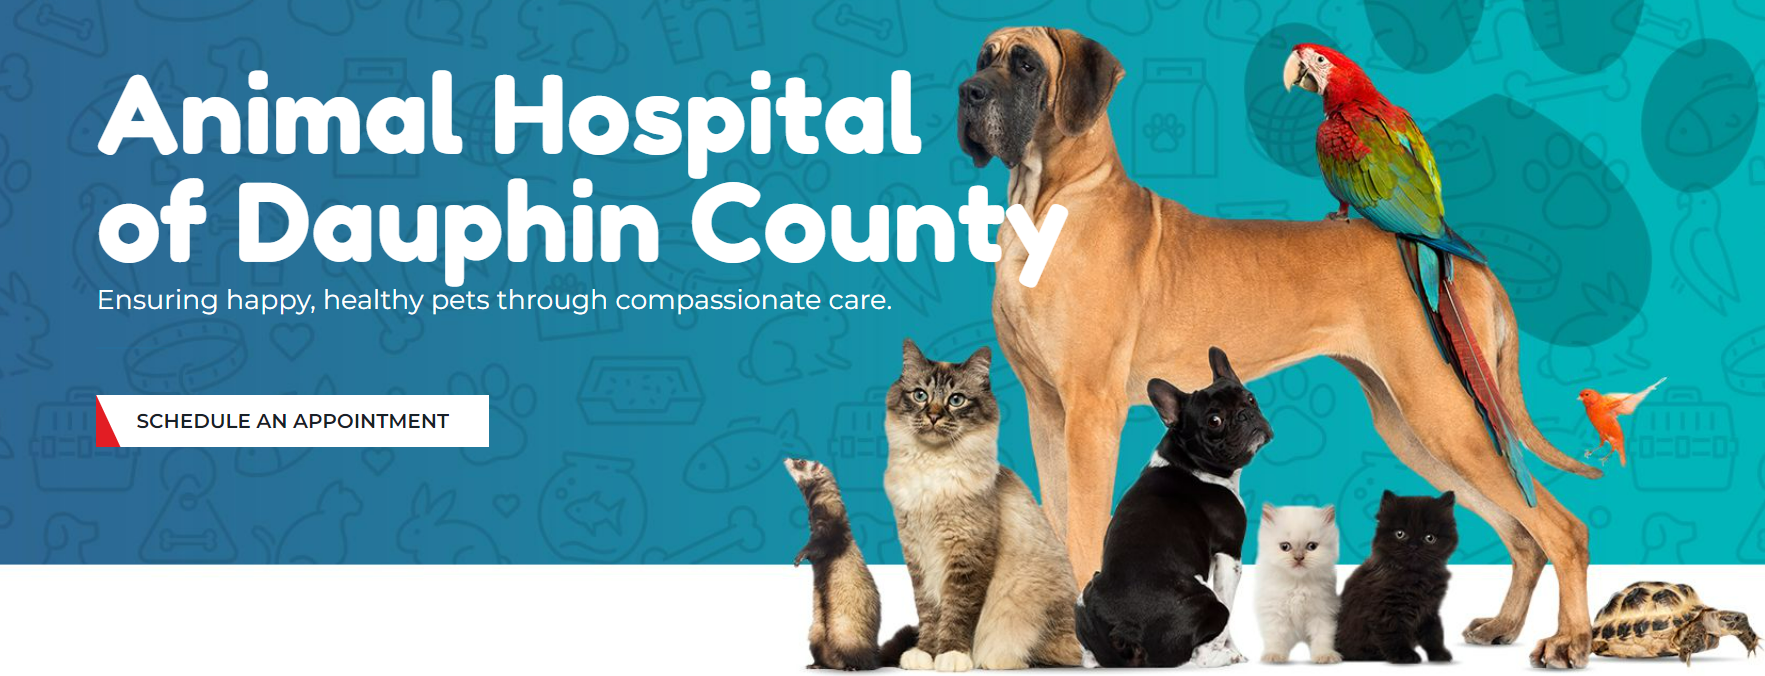 Animal Hospital of Dauphin County Harrisburg (717)775-7554